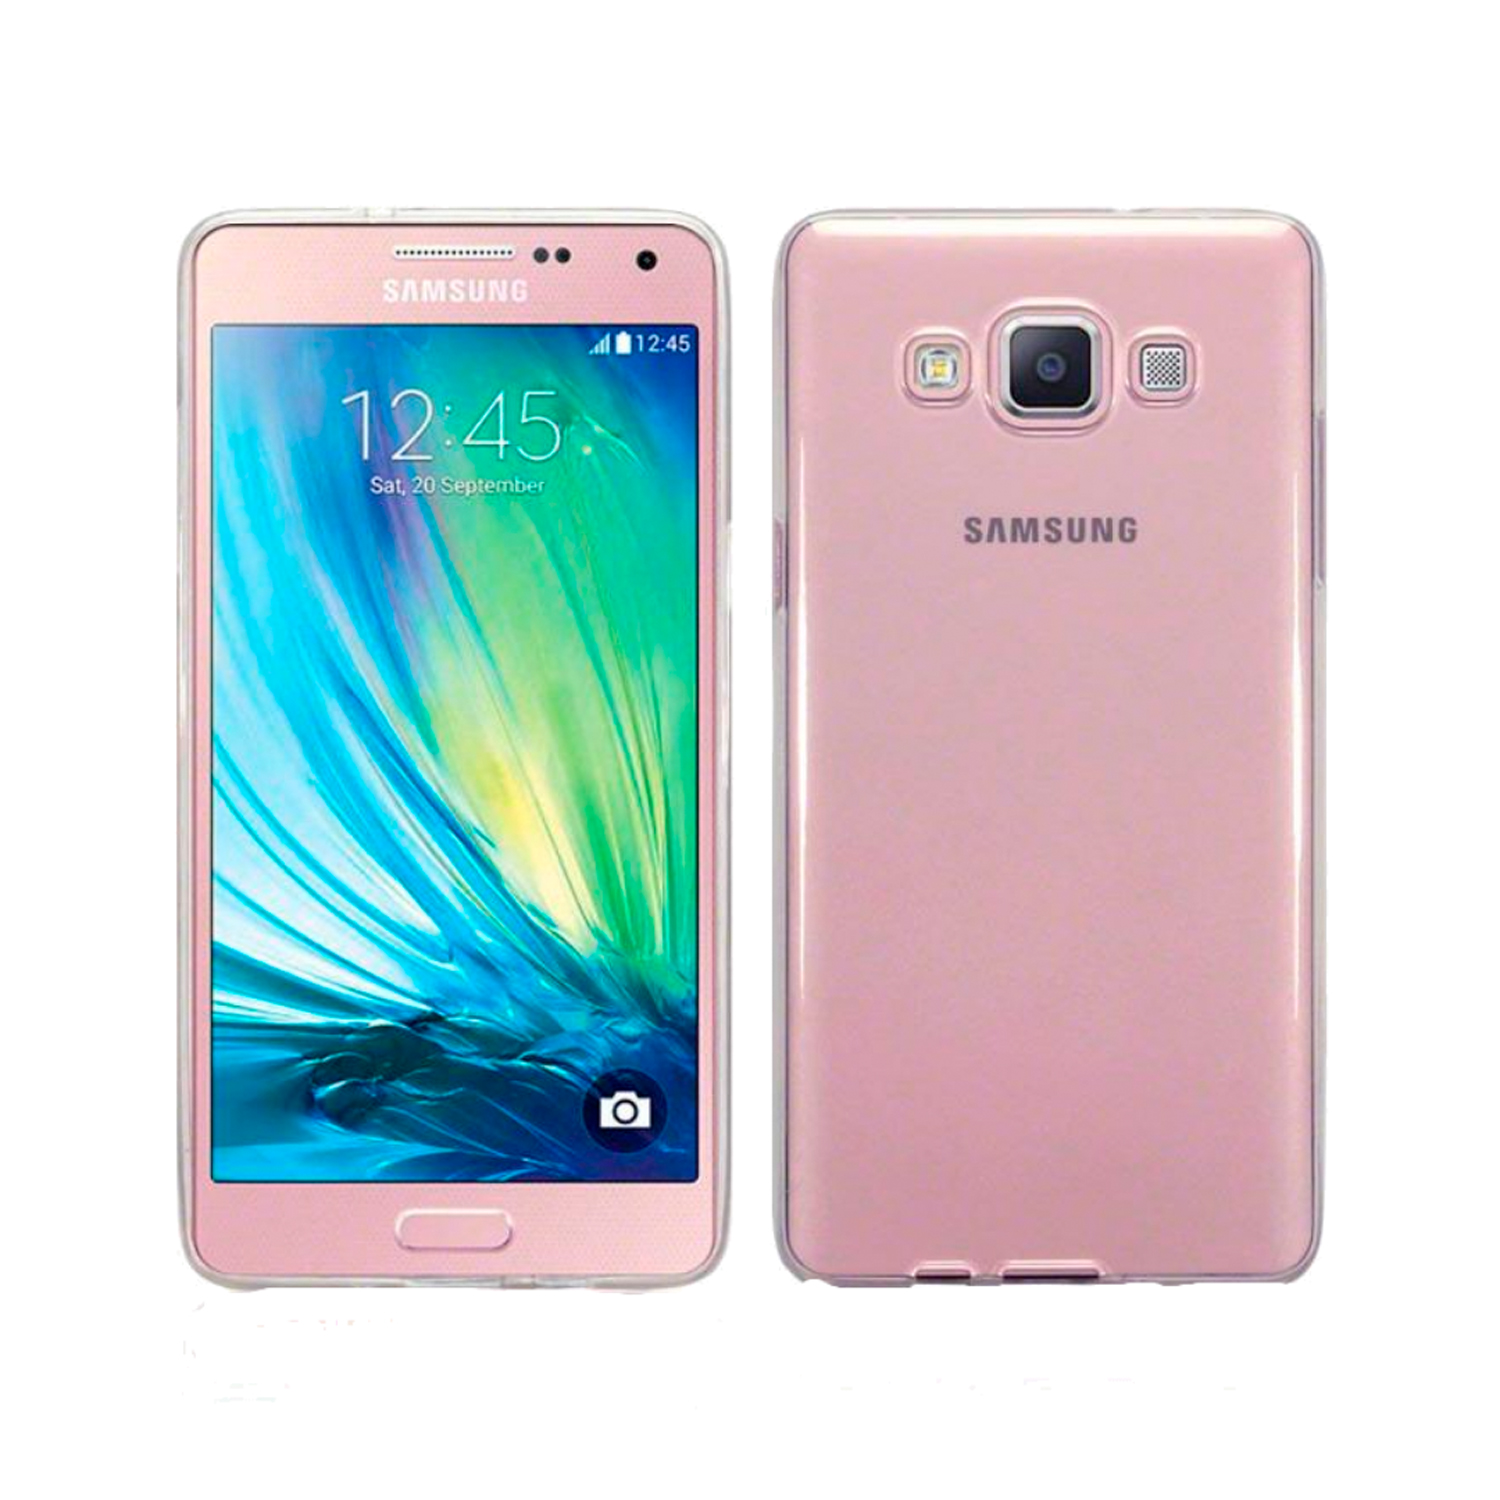 Самсунг а55 цвета. Samsung Galaxy a5. Samsung a5 2015. Samsung a5 2014. Samsung a5 2013.